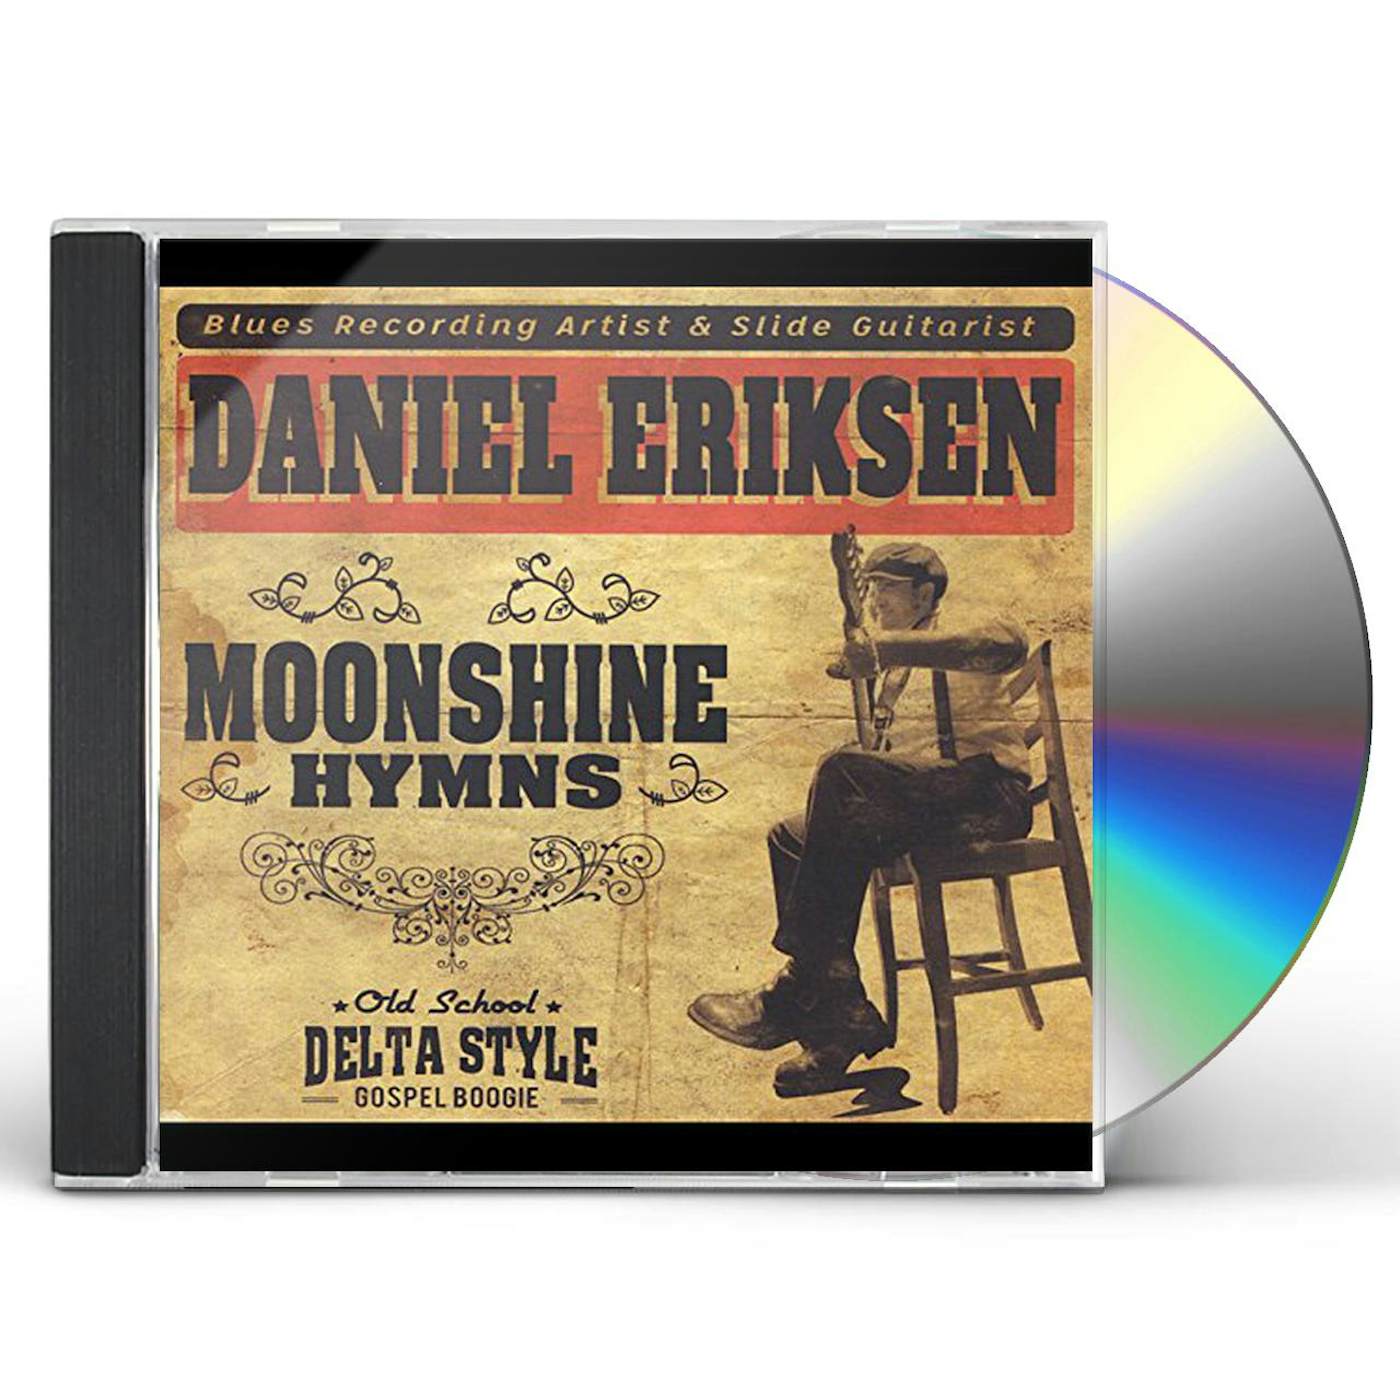 Daniel Eriksen MOONSHINE HYMNS CD